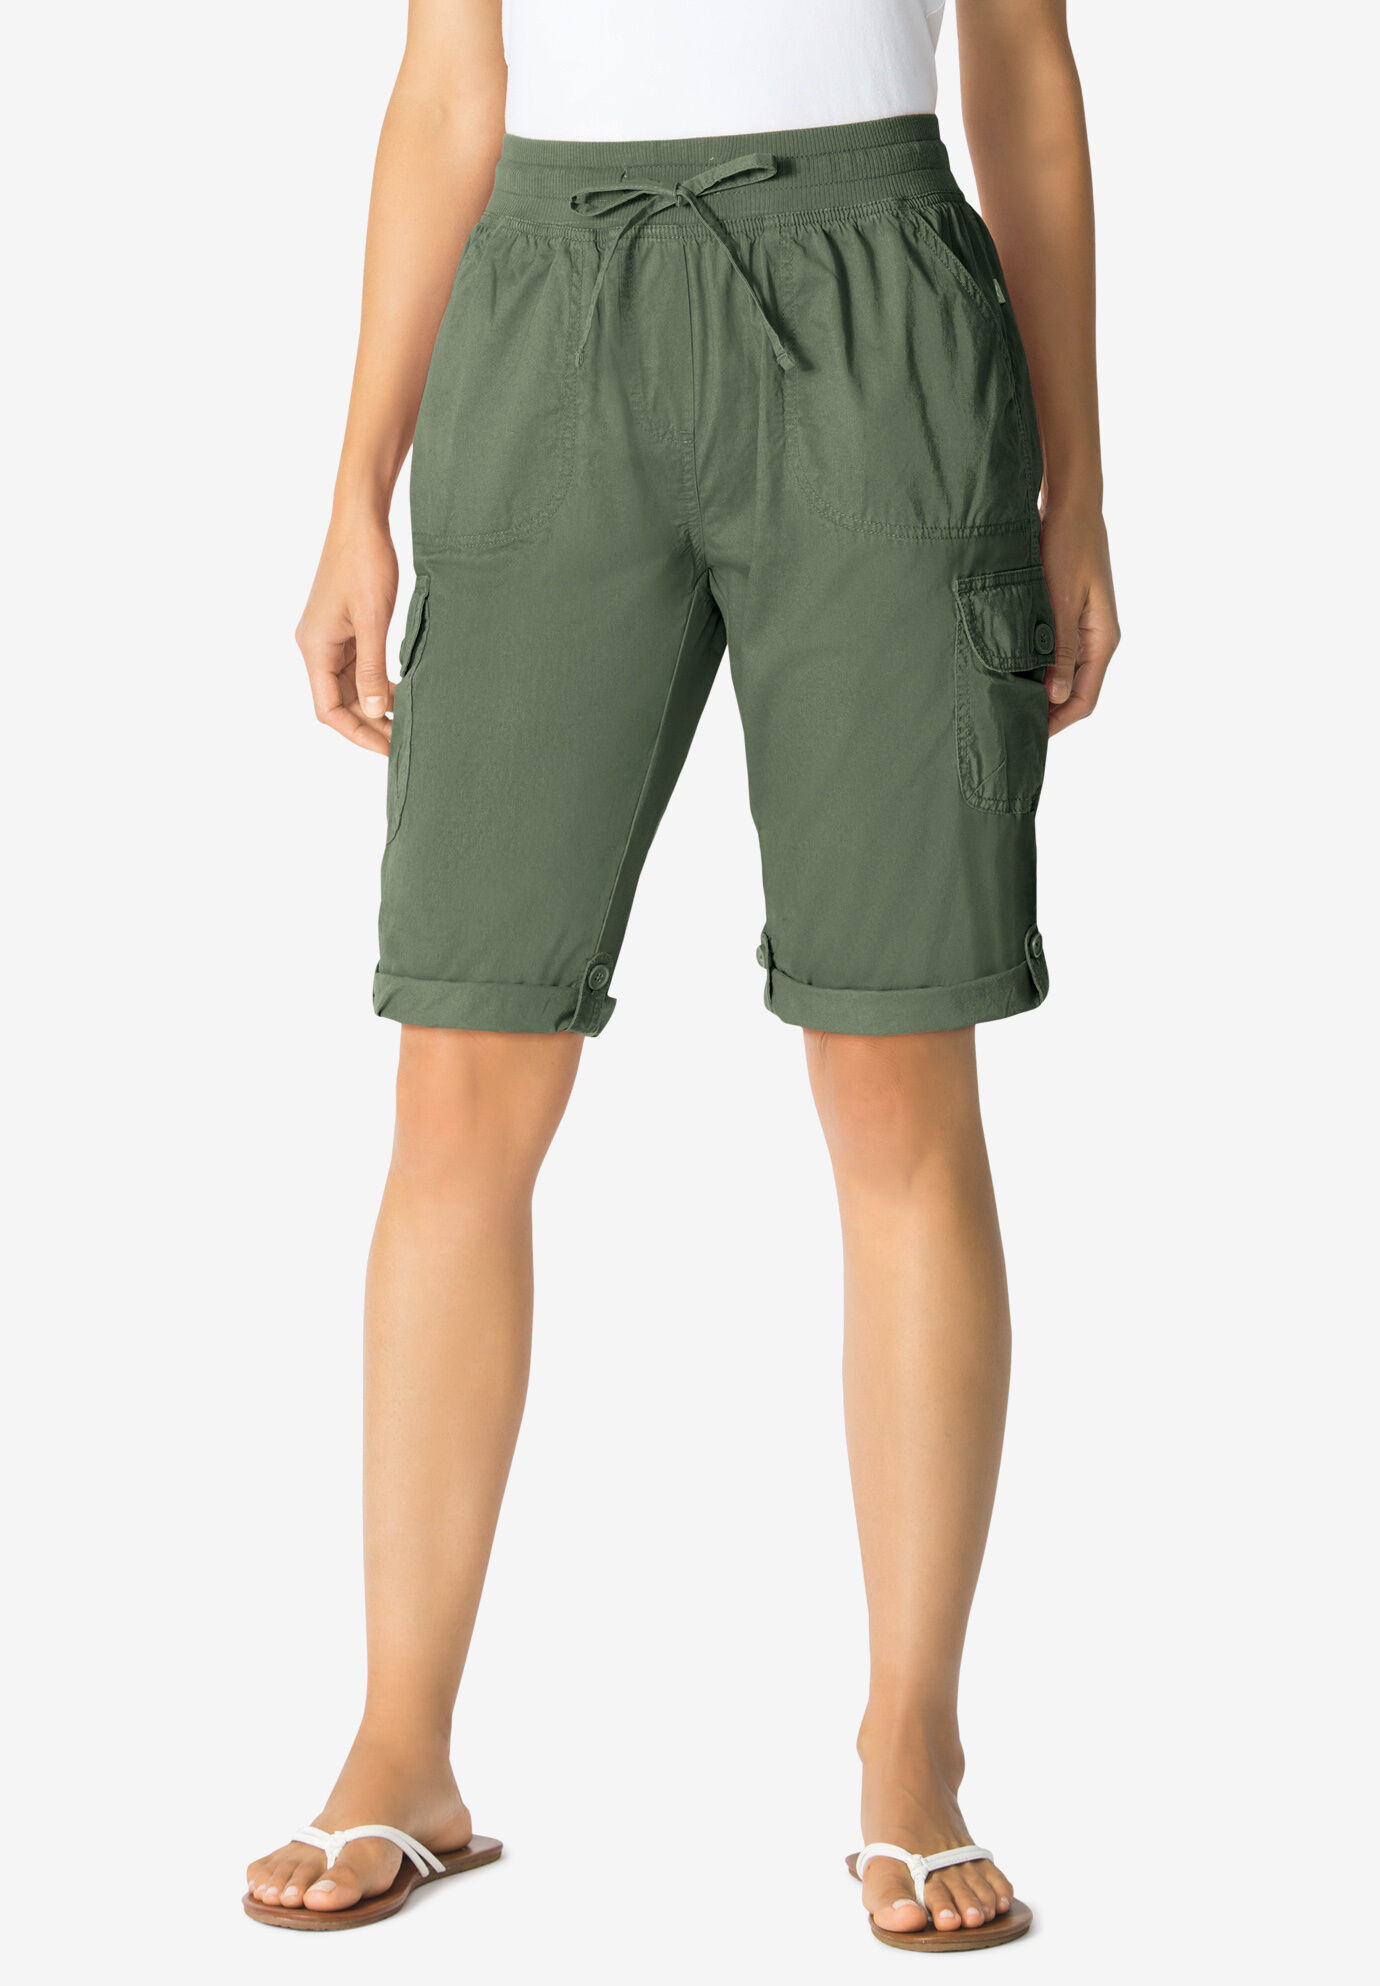 short cargo pants for women